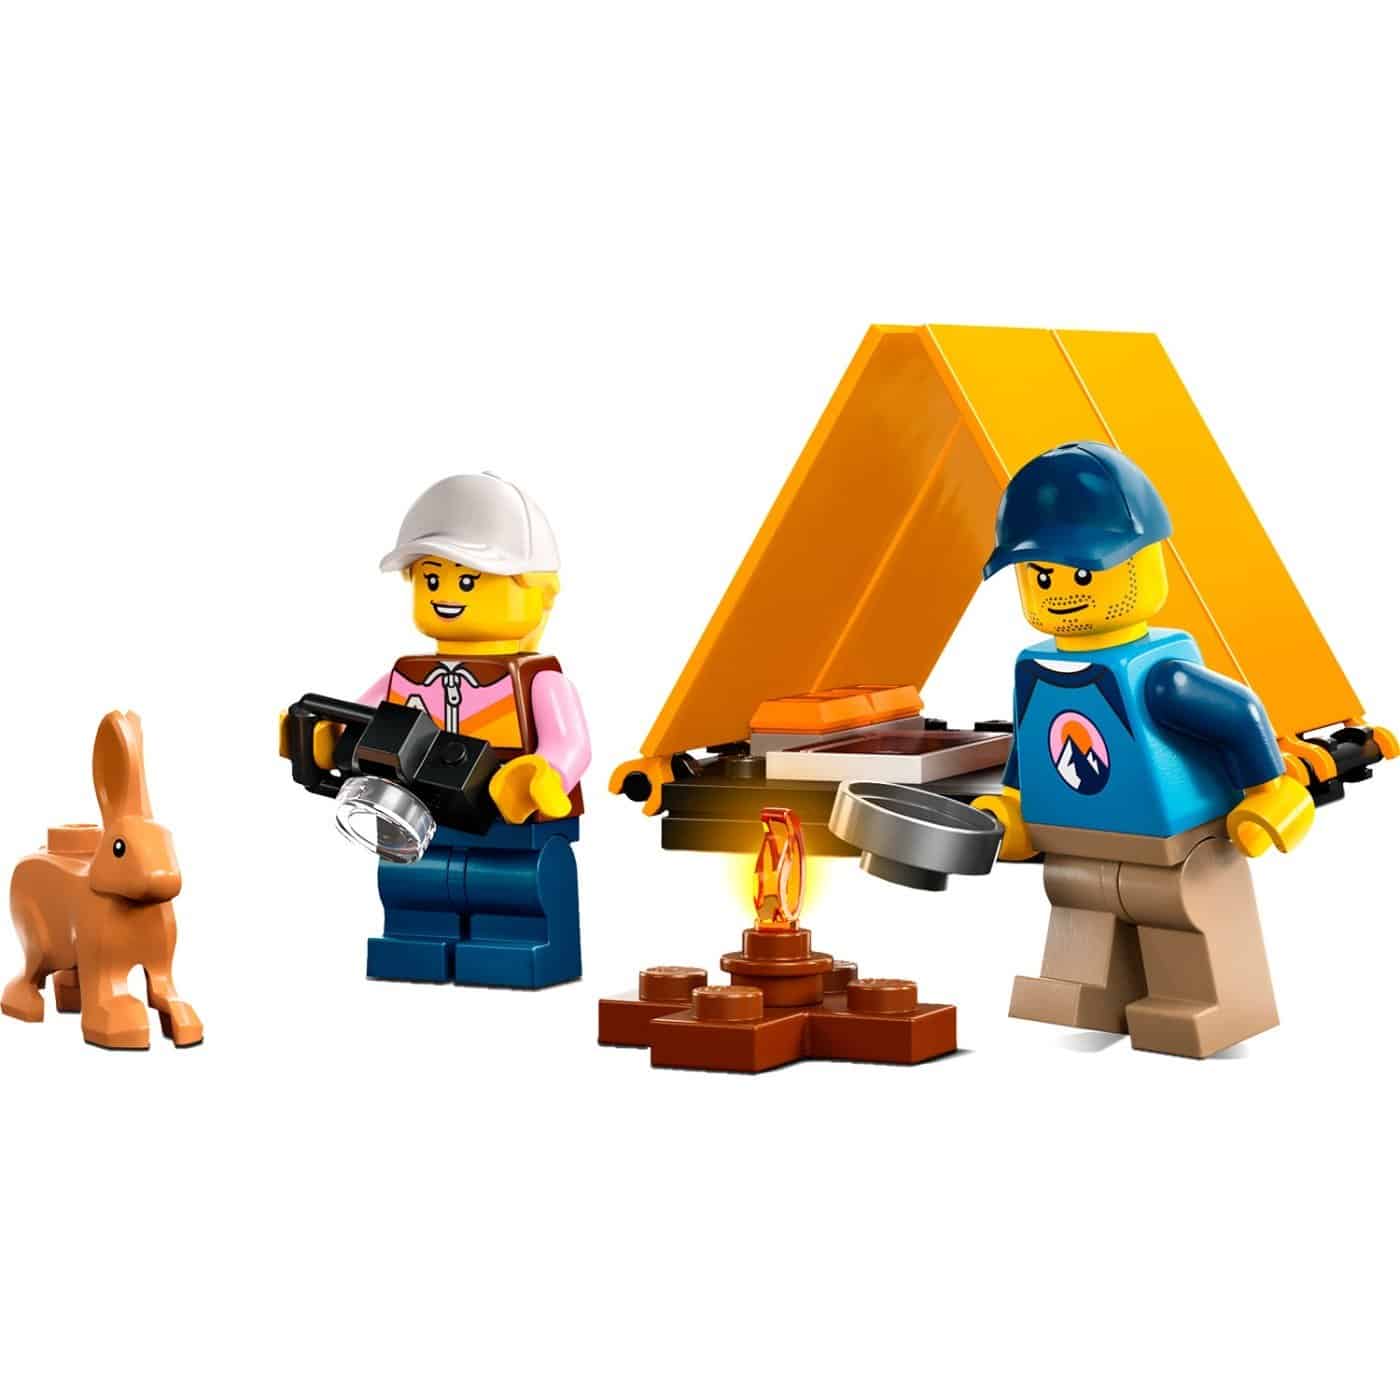 60387 Lego City 4X4 Off-Roader Adventures